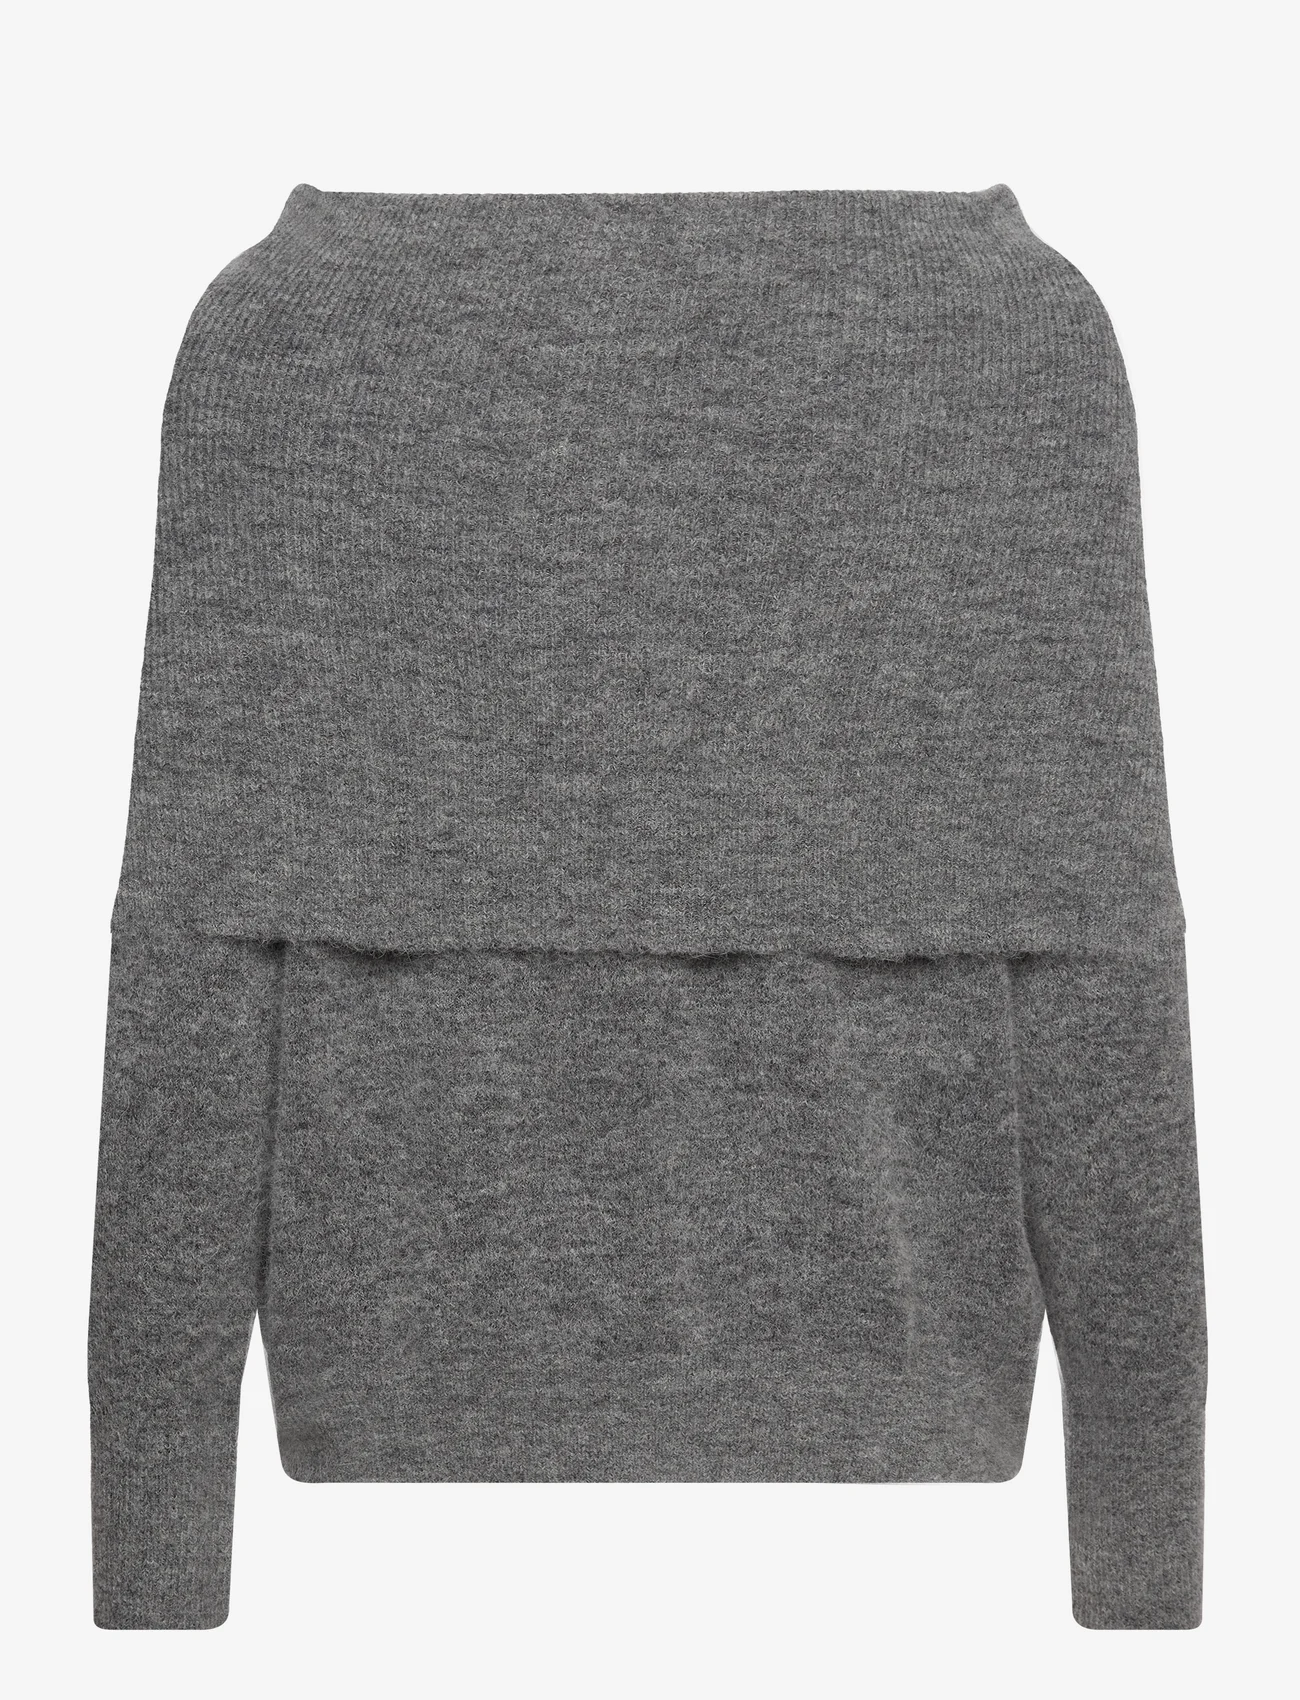 Stylein - EVRY - pullover - grey - 1